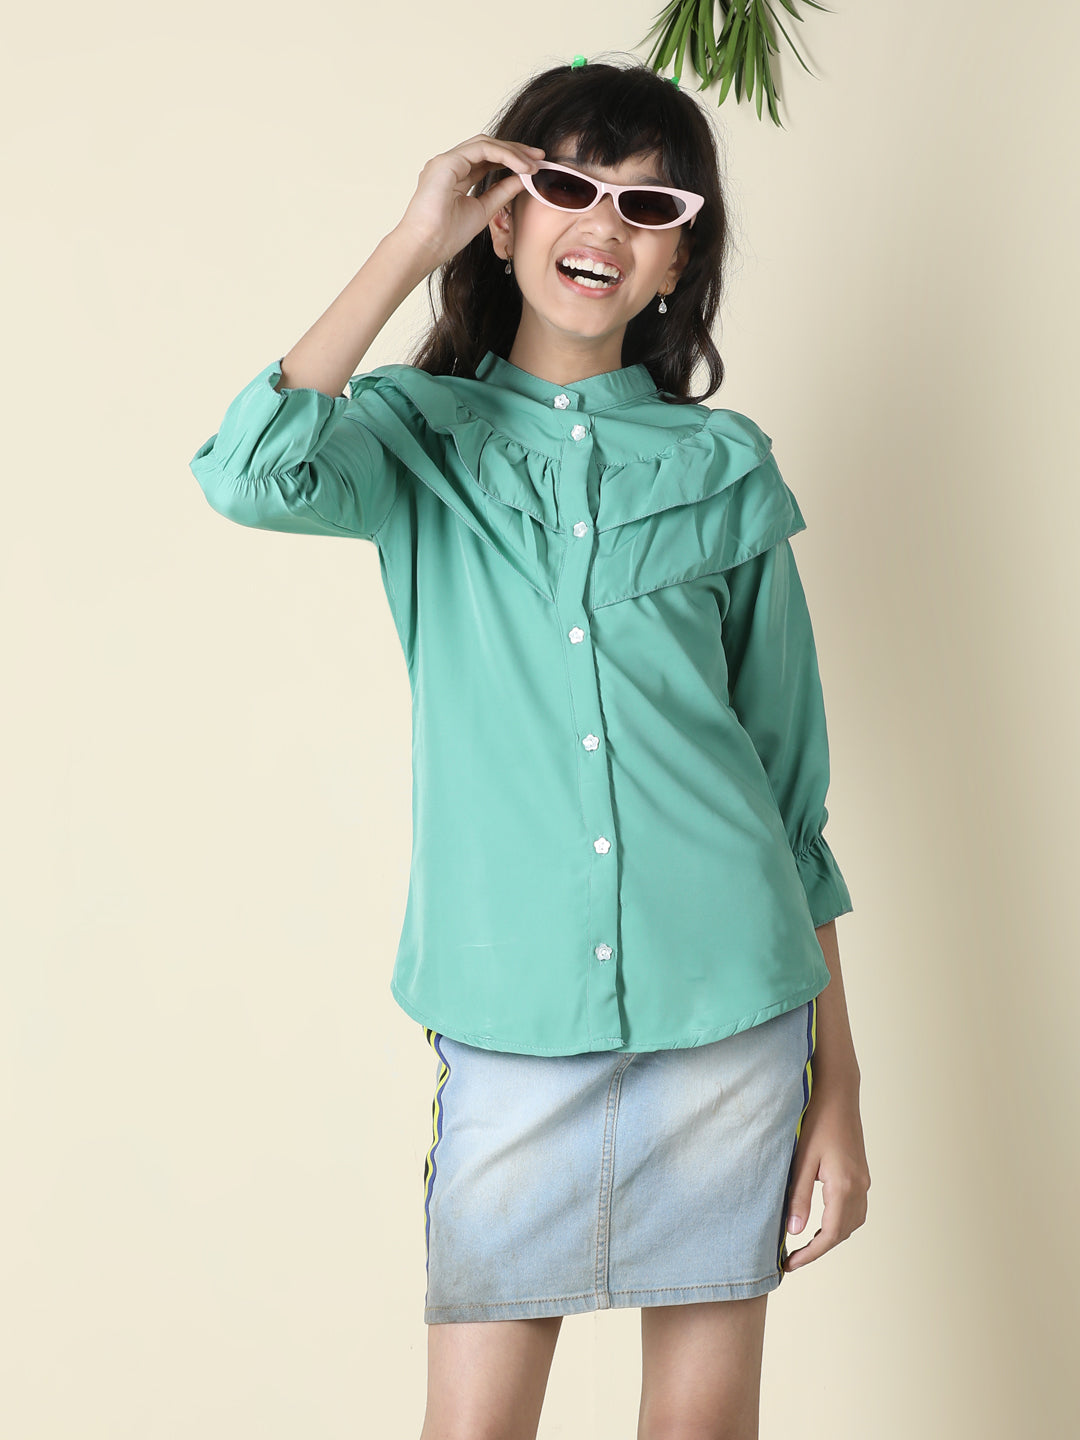 Cutiekins Girls Shirt Style Solid Embellished Top -Sea Green